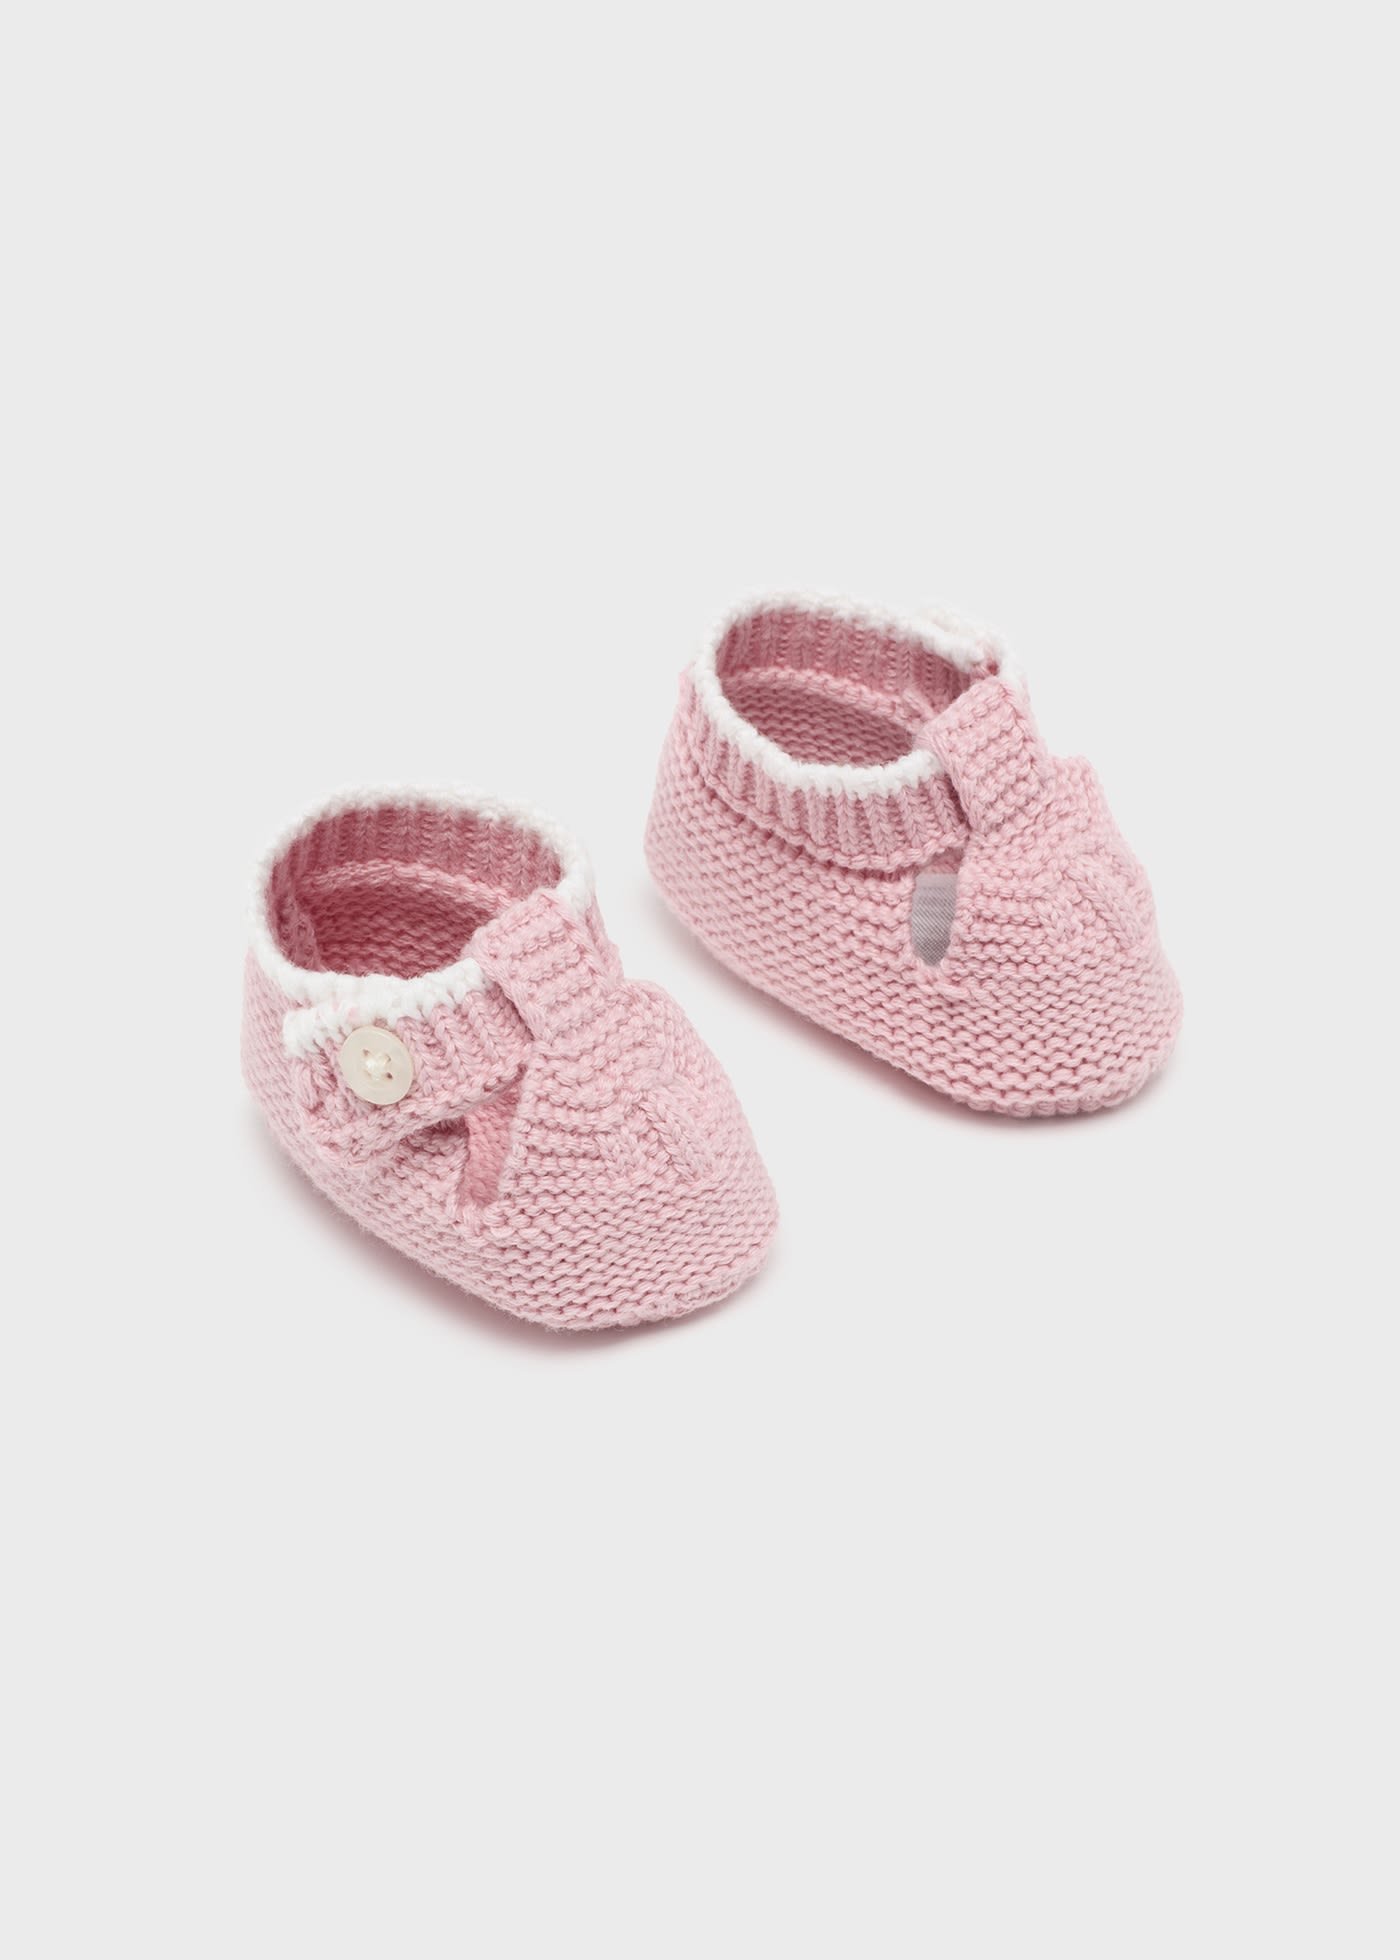 Sustainable cotton knit booties newborn